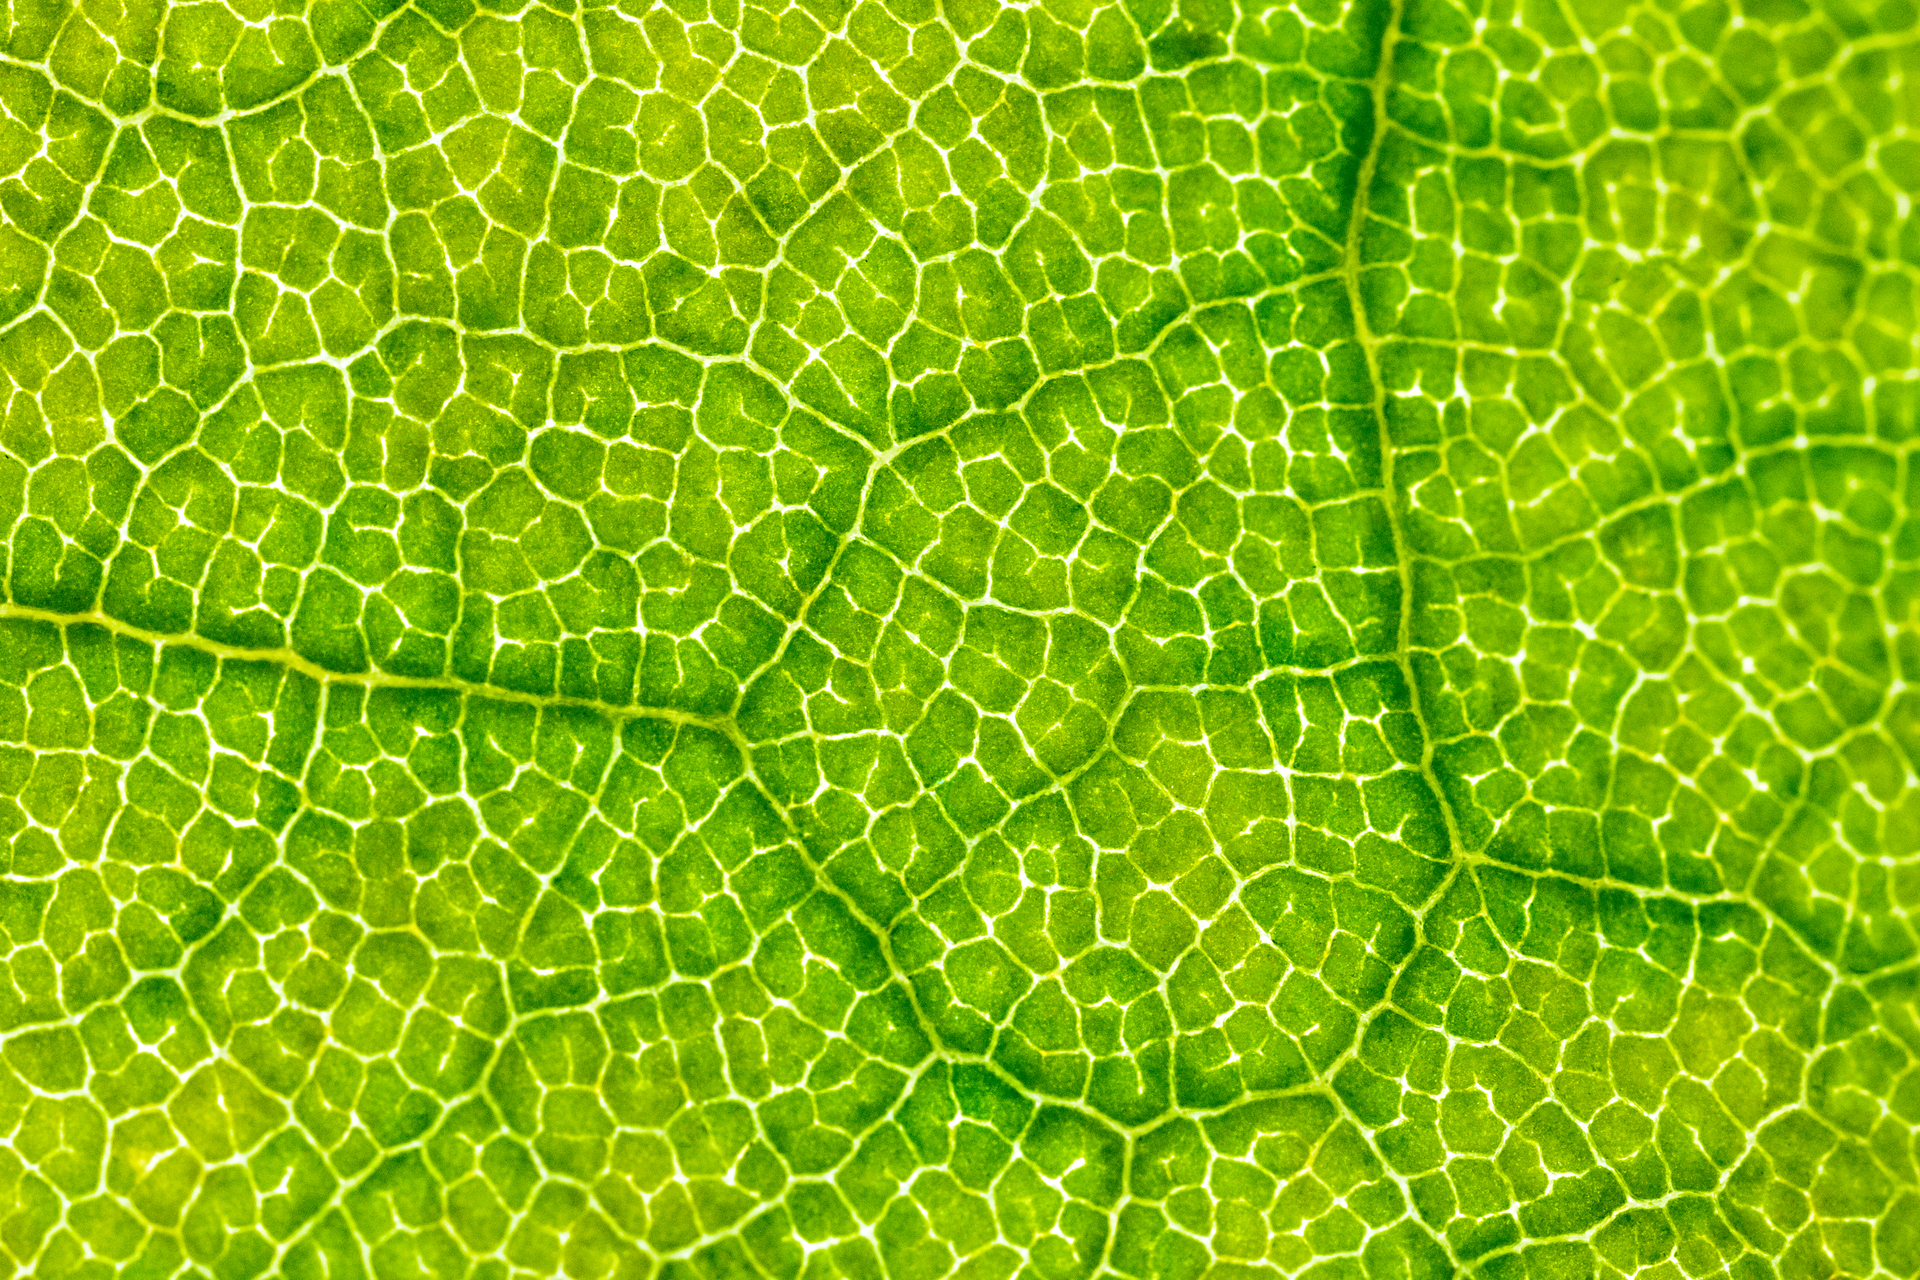 Extreme close-up of leaf, green color, 5x magnification, back lit